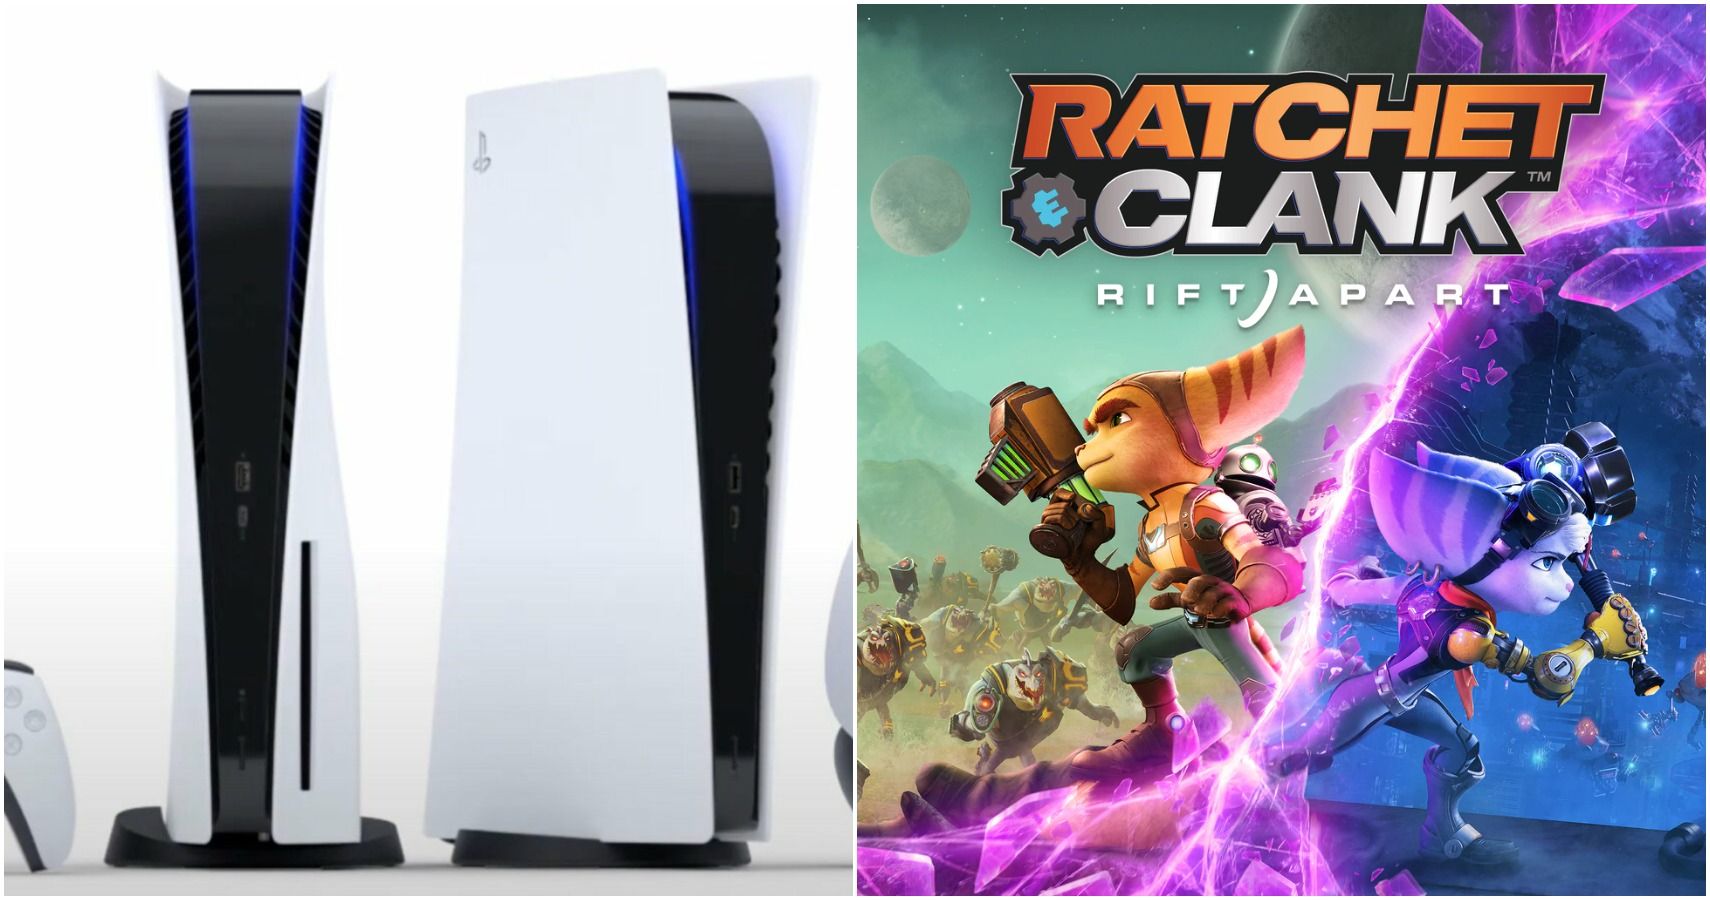 Ratchet & Clank: Rift Apart PS5 Bundles Are Appearing Online